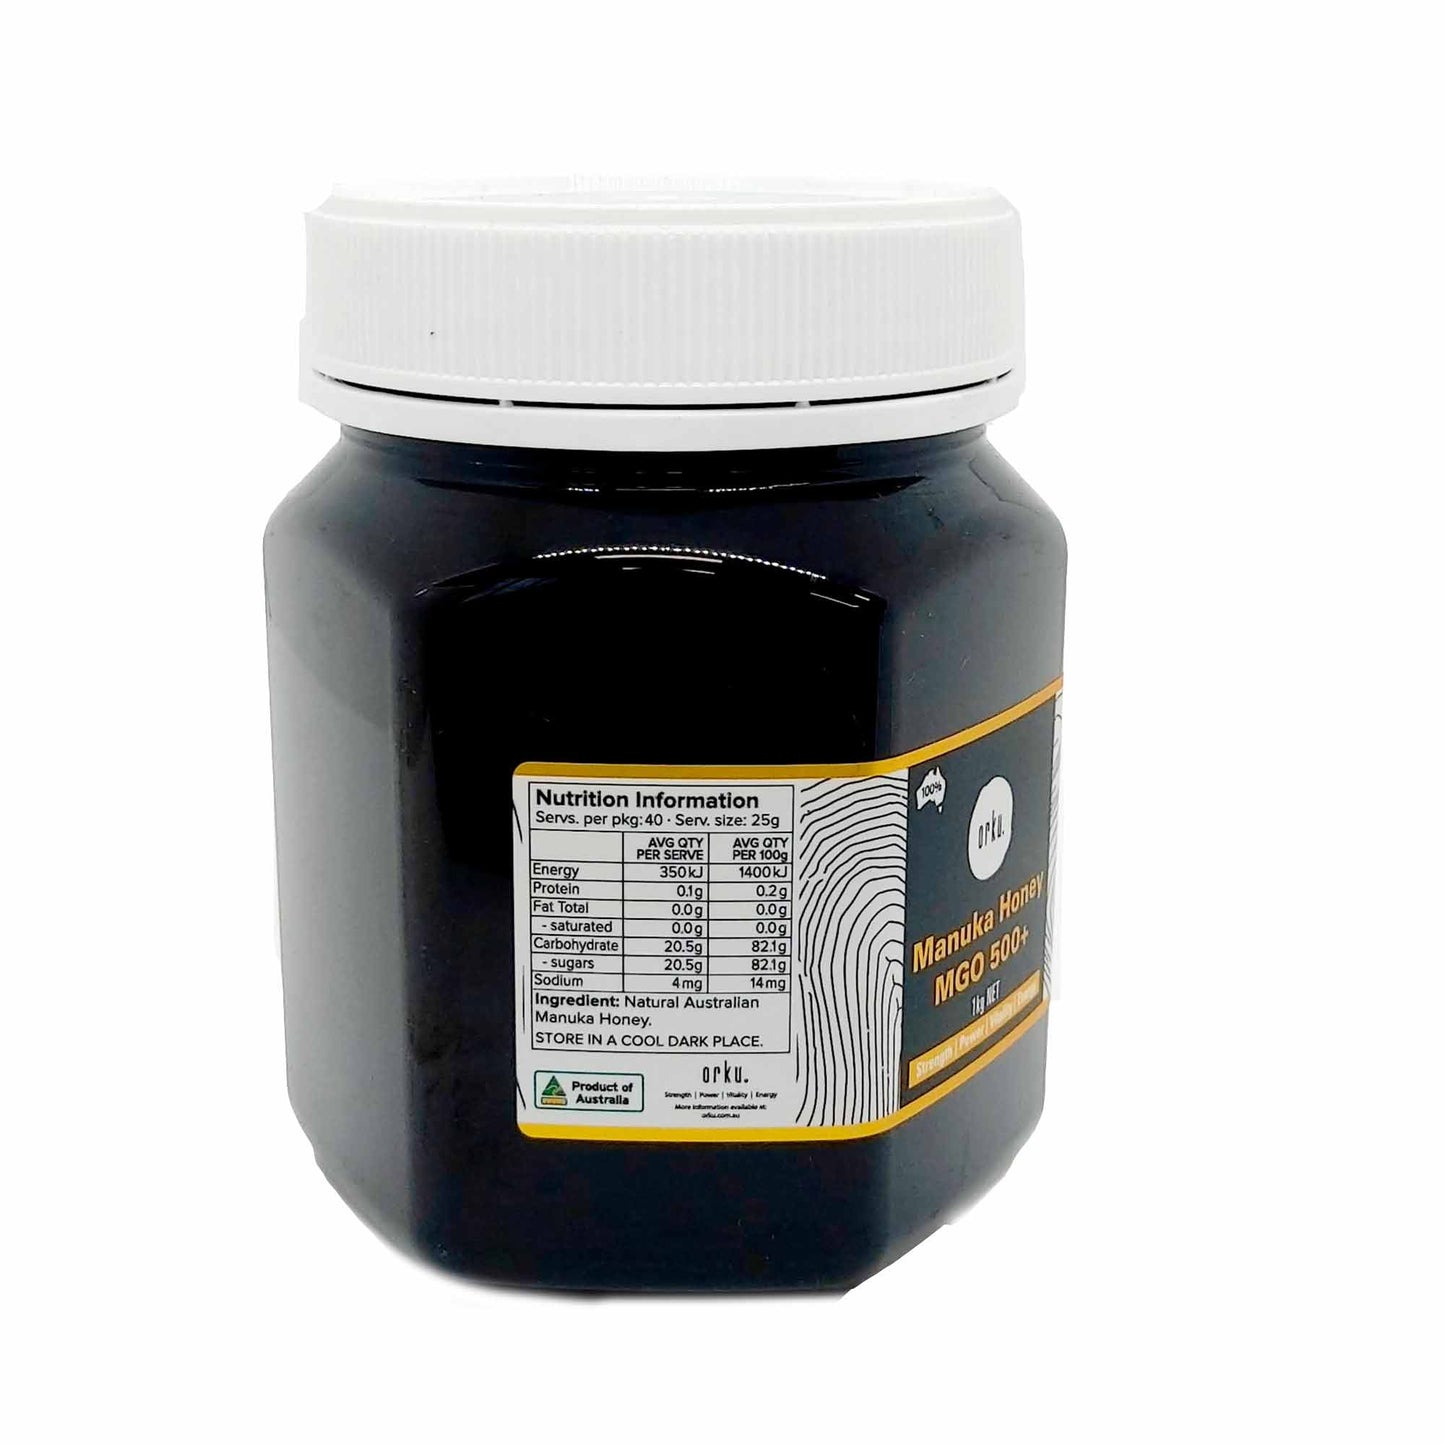 1Kg MGO 500+ Australian Manuka Honey - 100% Raw Natural Pure Jelly Bush